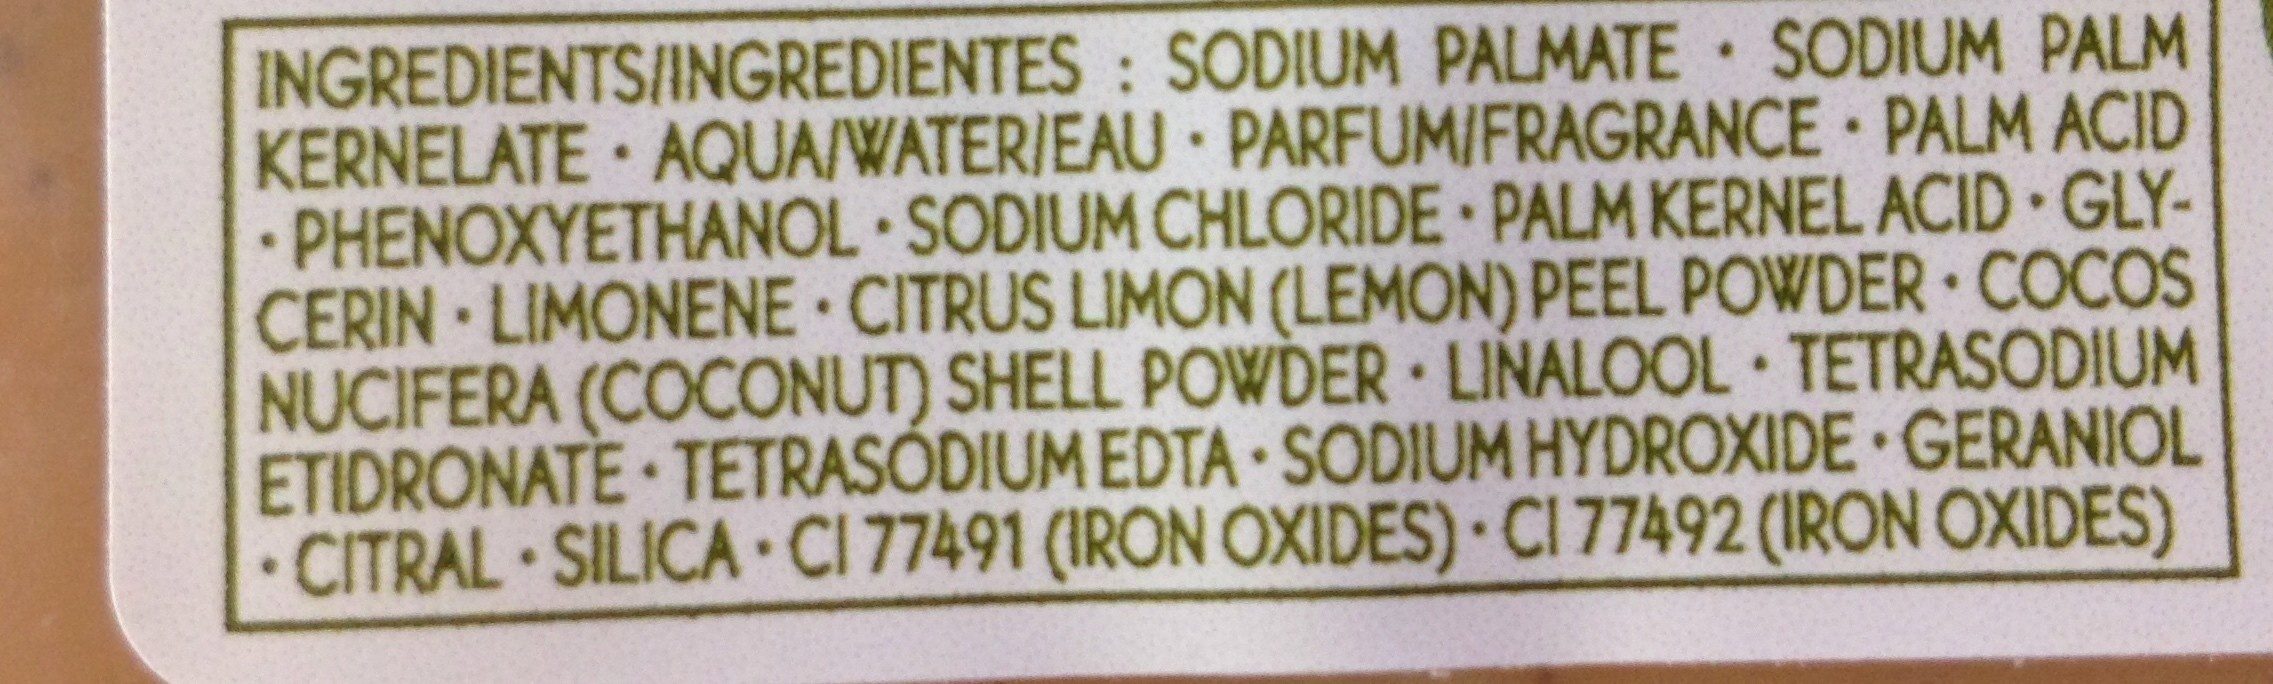 Savon exfoliant energisant - Ingredients - fr